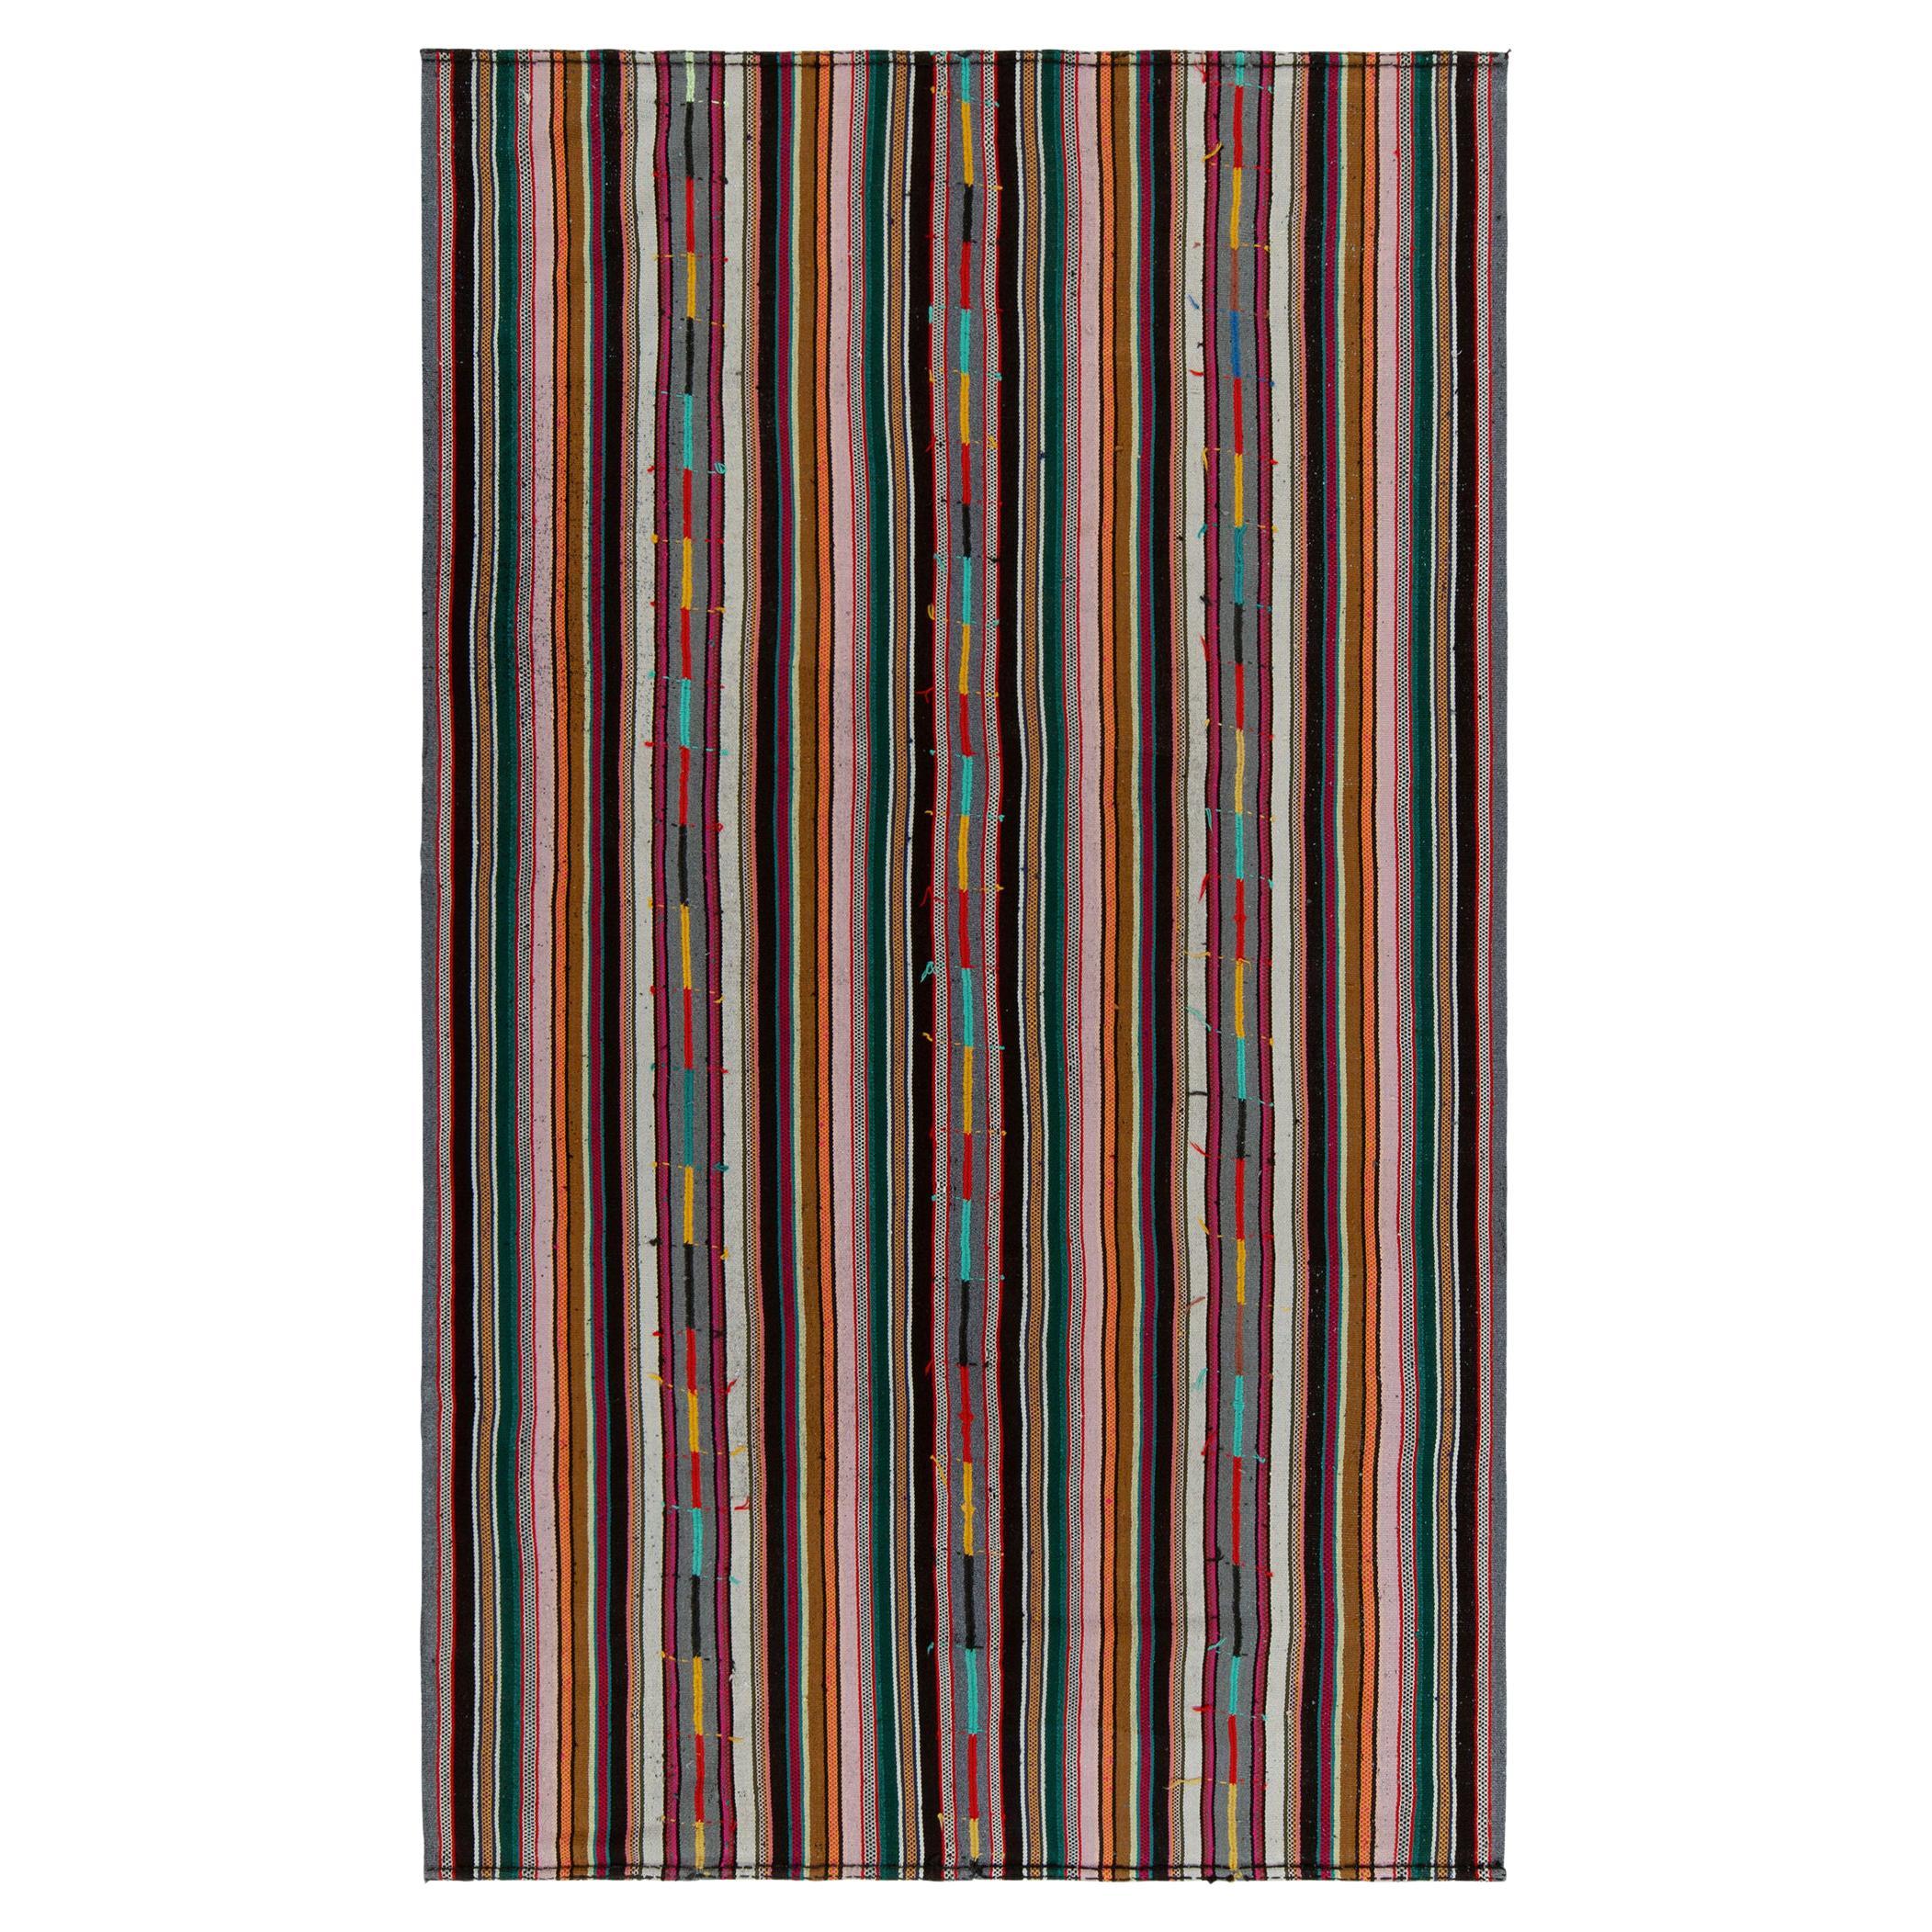 1950s Vintage Chaput Kilim Rug in Multicolor Stripe Patterns by Rug & Kilim